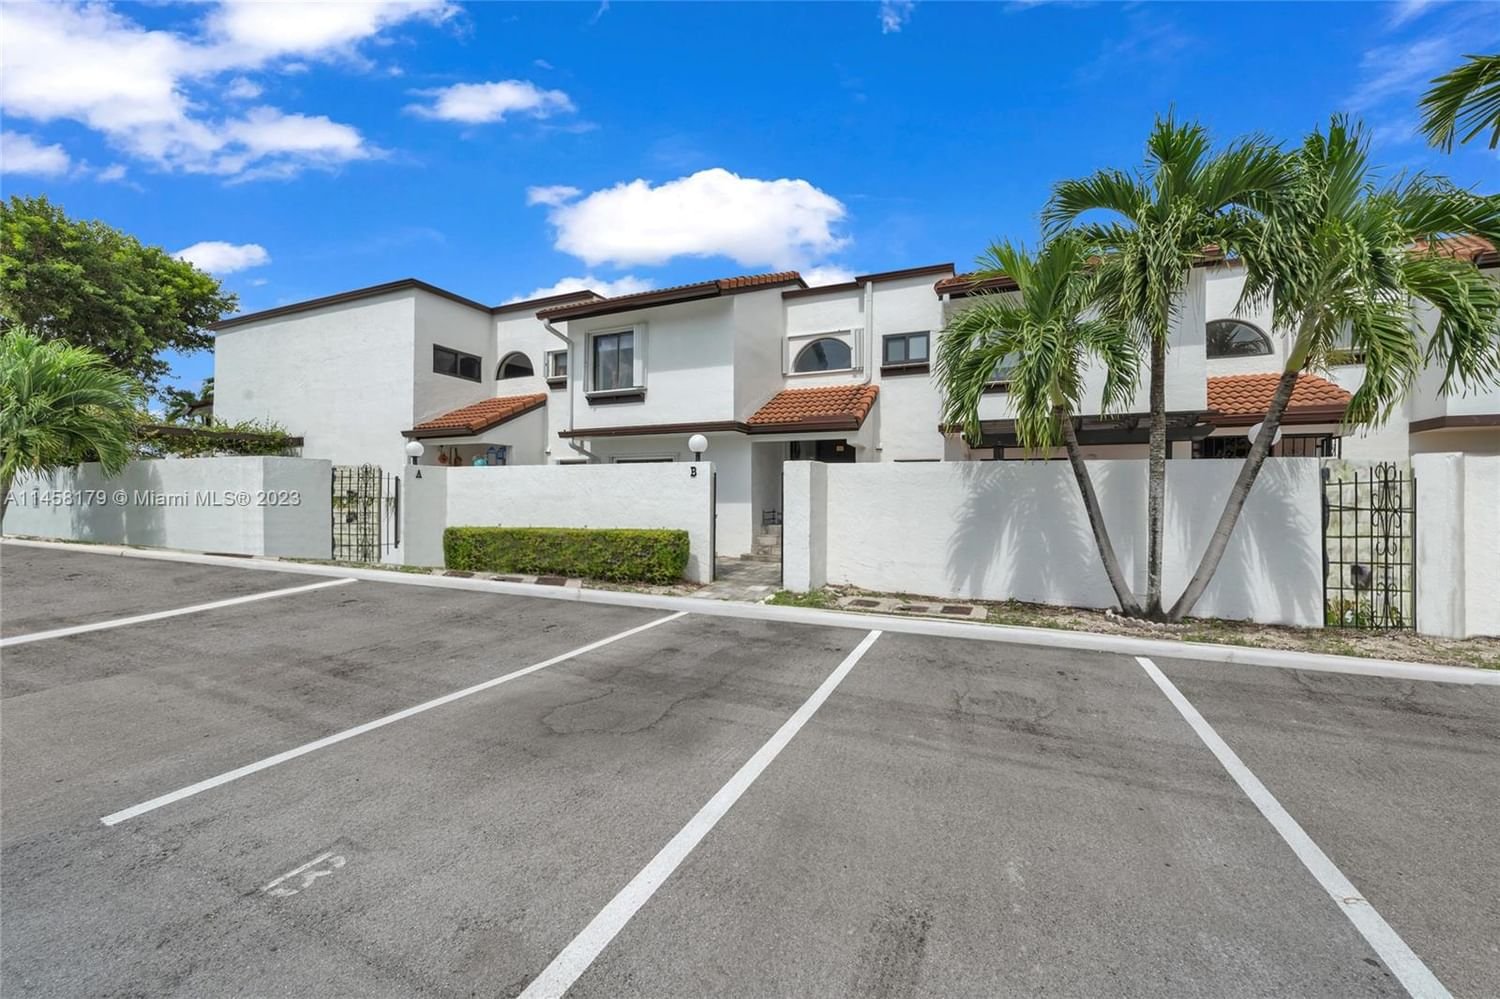 Real estate property located at 1351 124th Ct B5, Miami-Dade County, Miami, FL